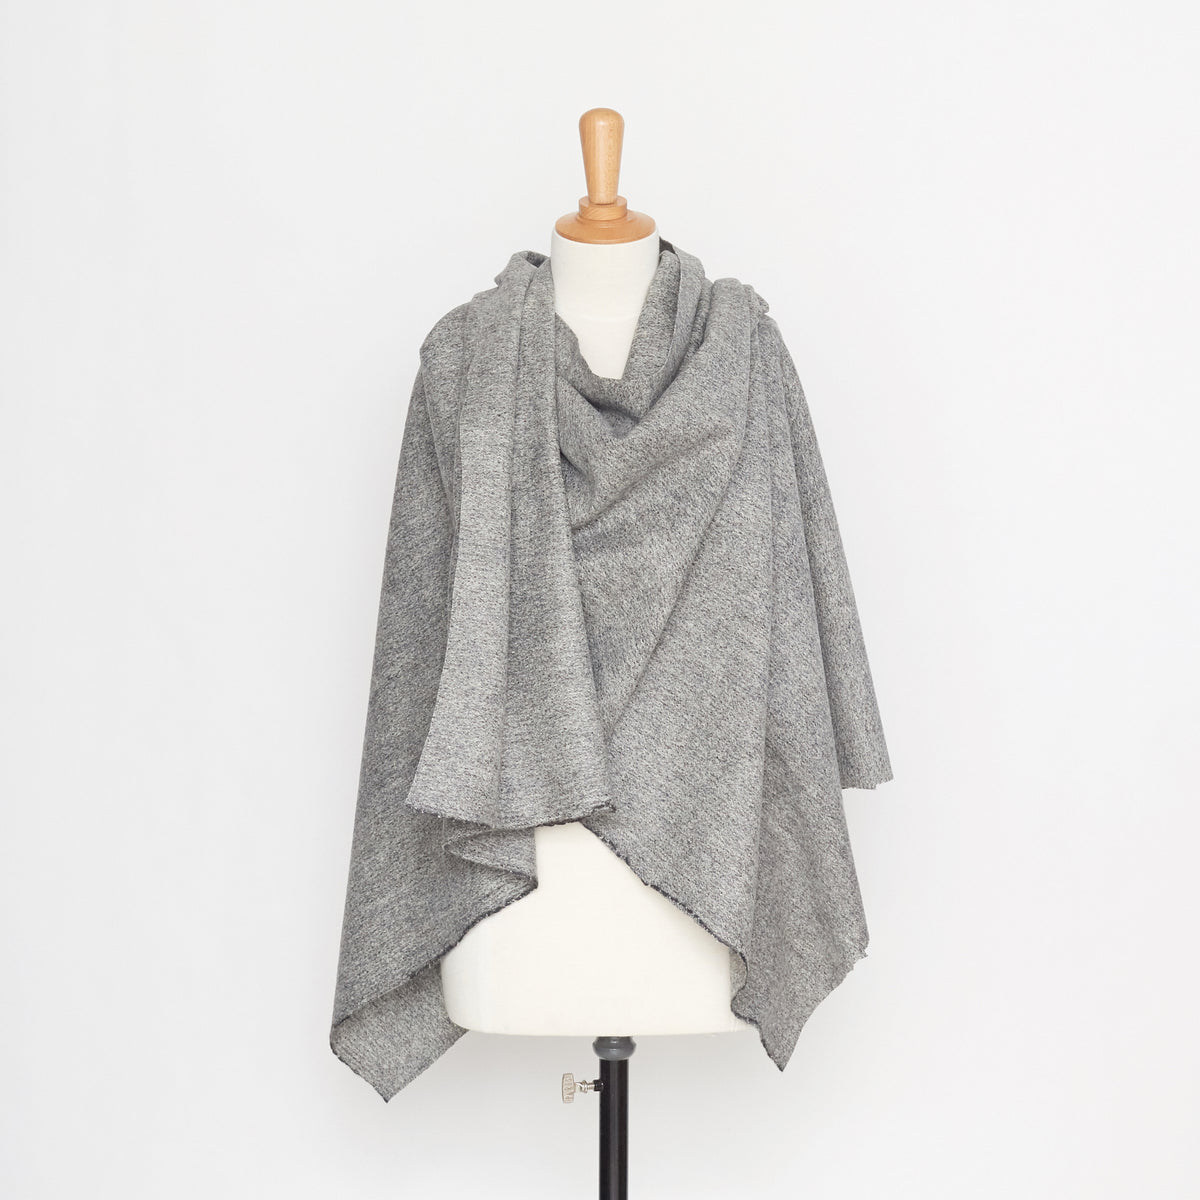 T20A00326 | Melange Wool Suiting